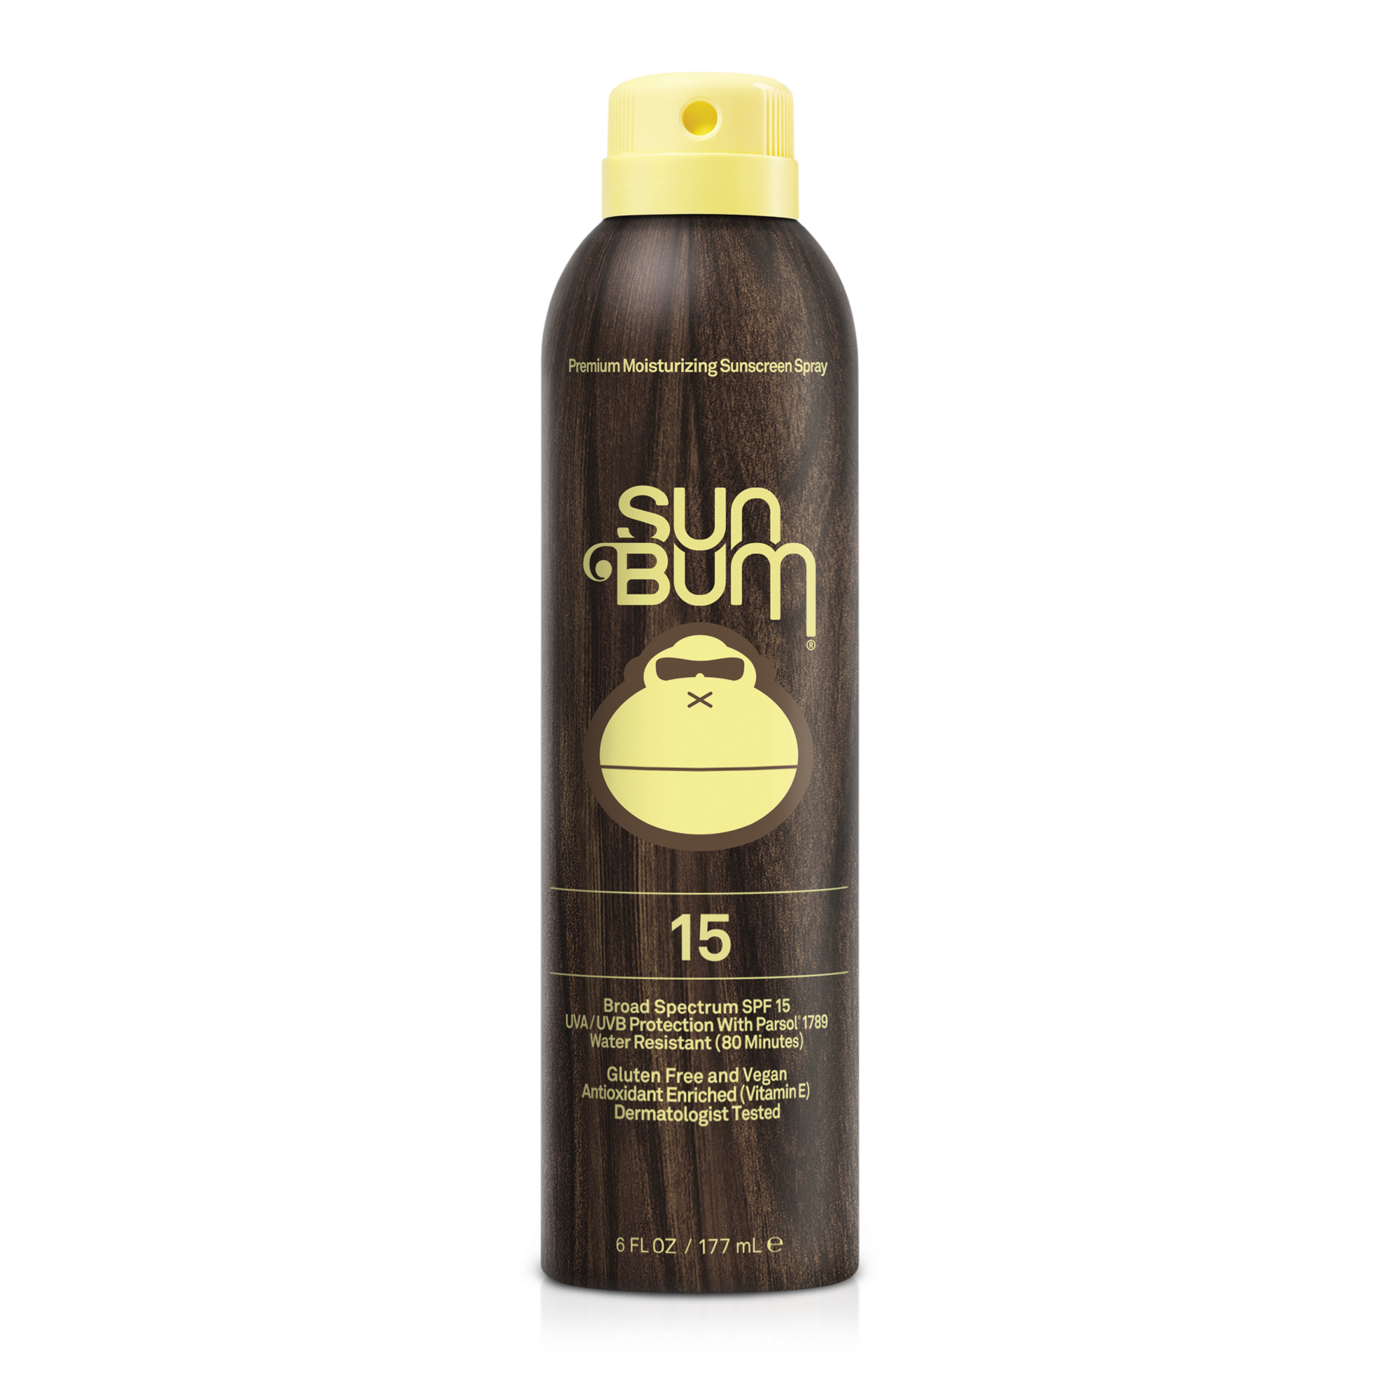 Sun Bum Original SPF 15 Sunscreen Spray